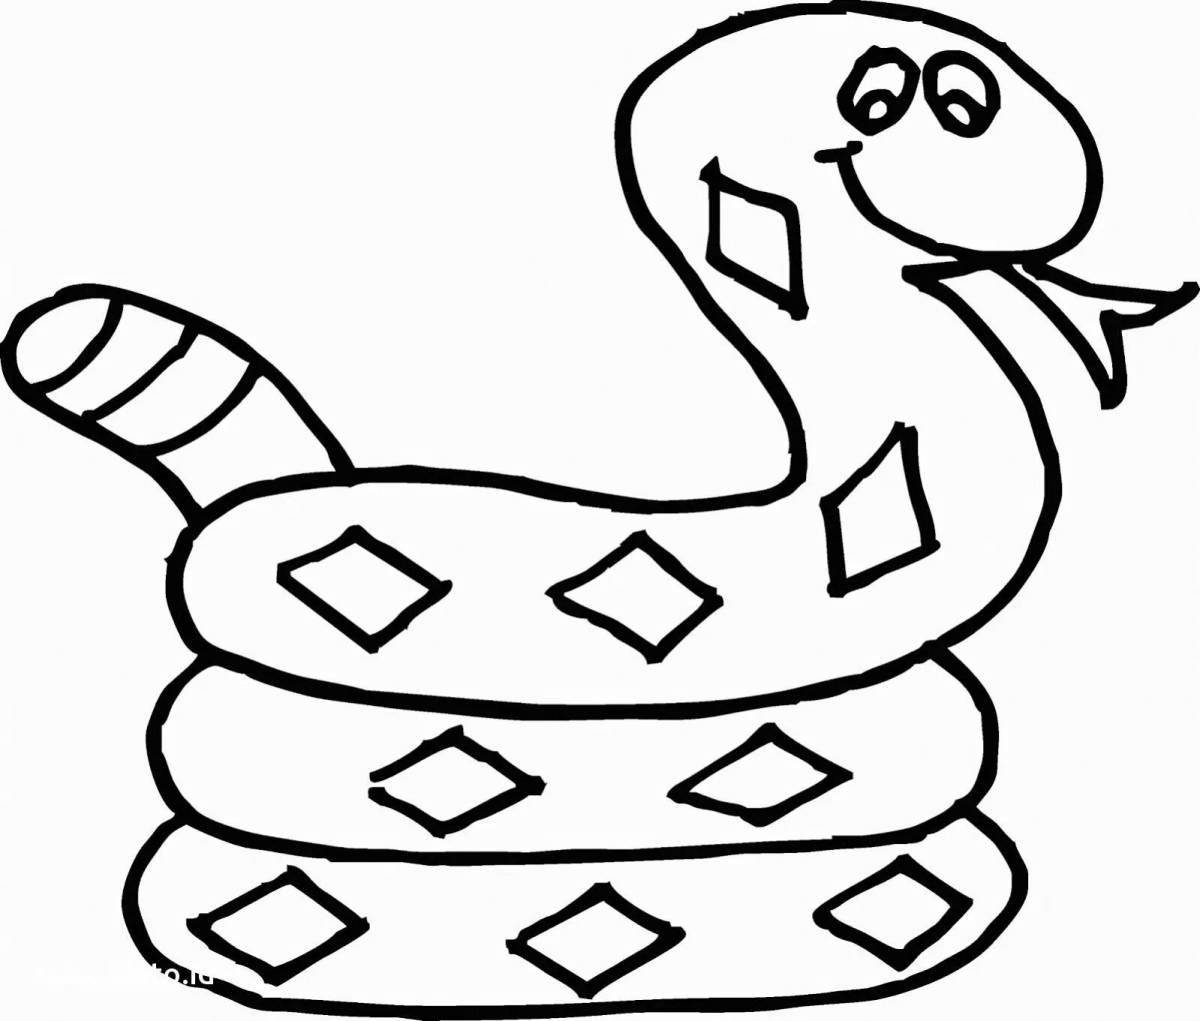 Snake for children 3 4 years old #17